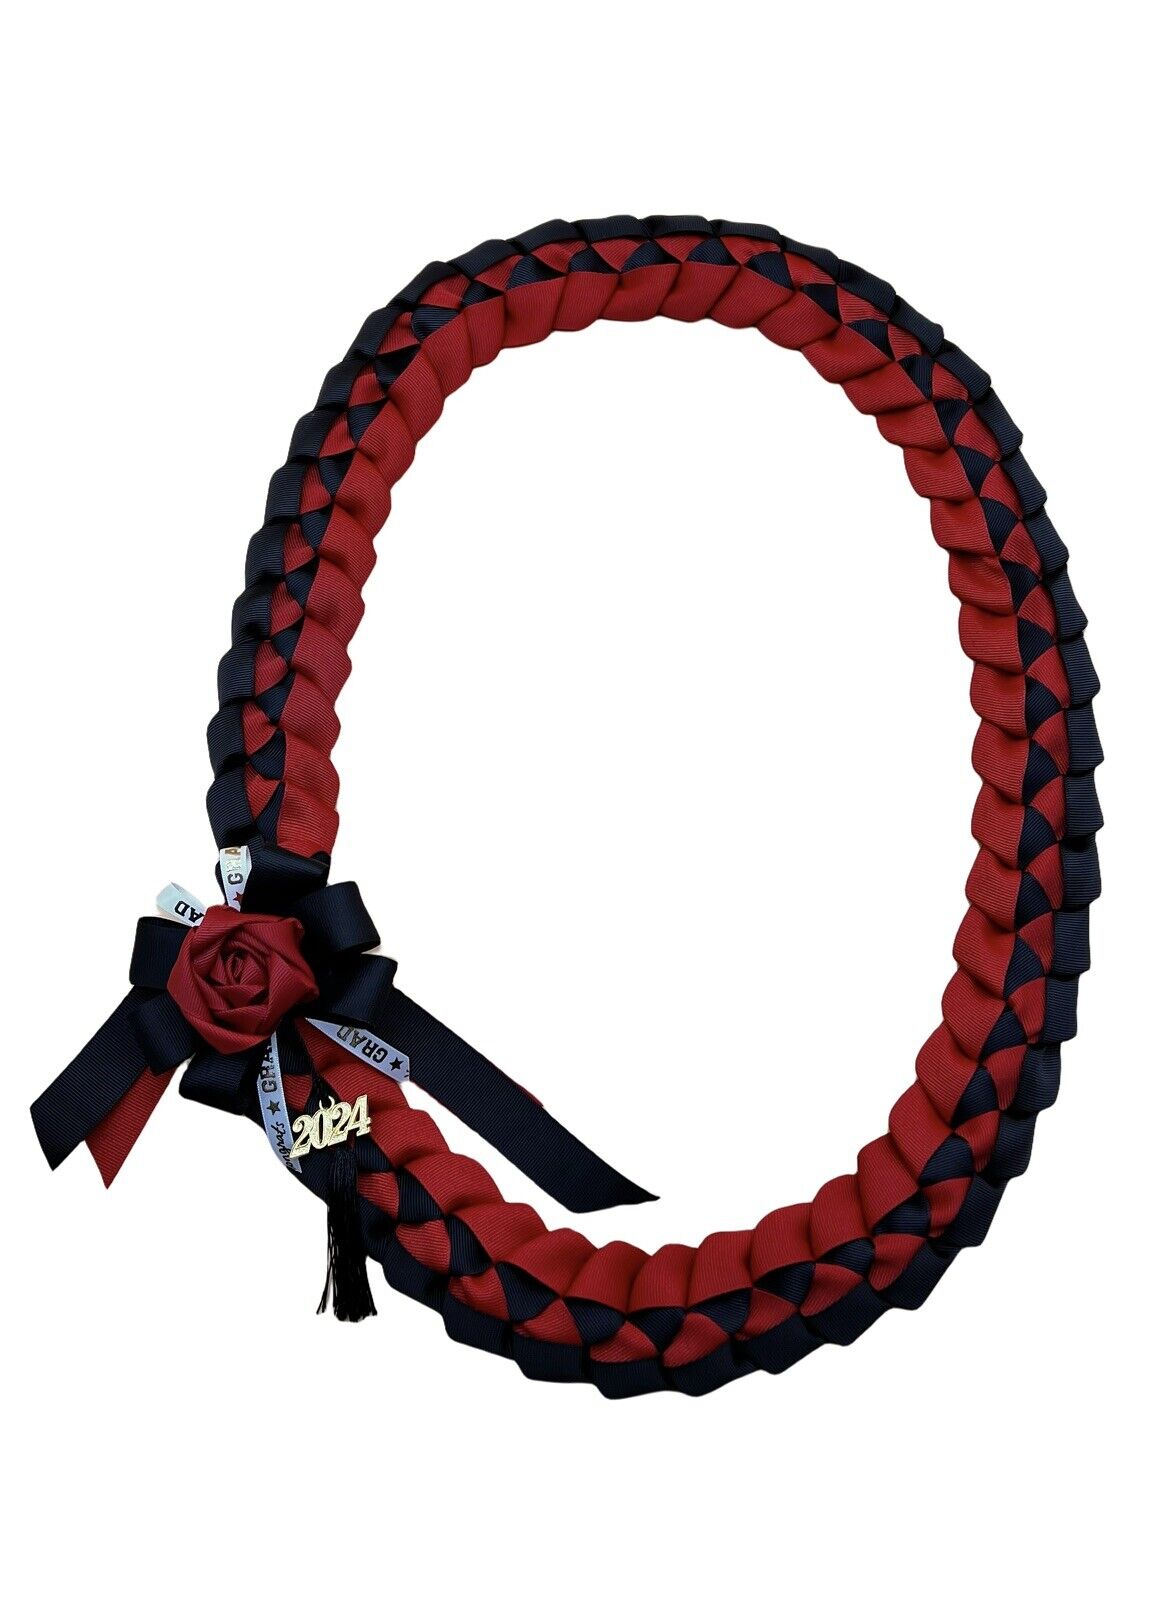 Grosgrain Ribbon Graduation Leis ，Red & Black School Colors 